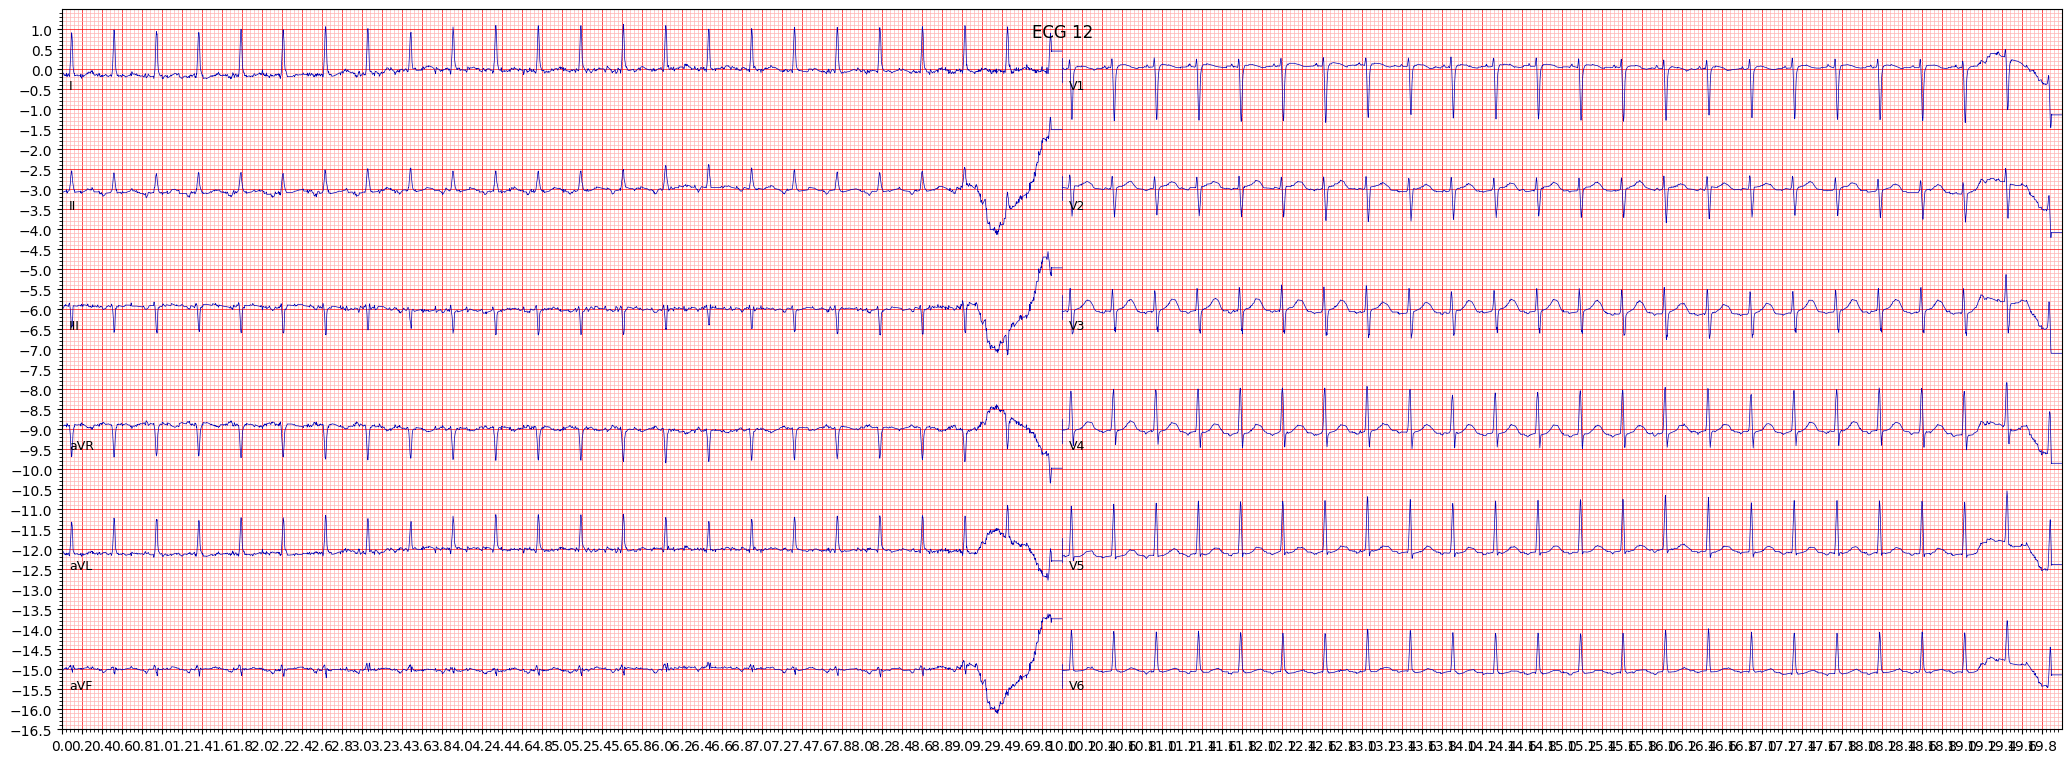 paroxysmal supraventricular tachycardia (PSVT) example 8461